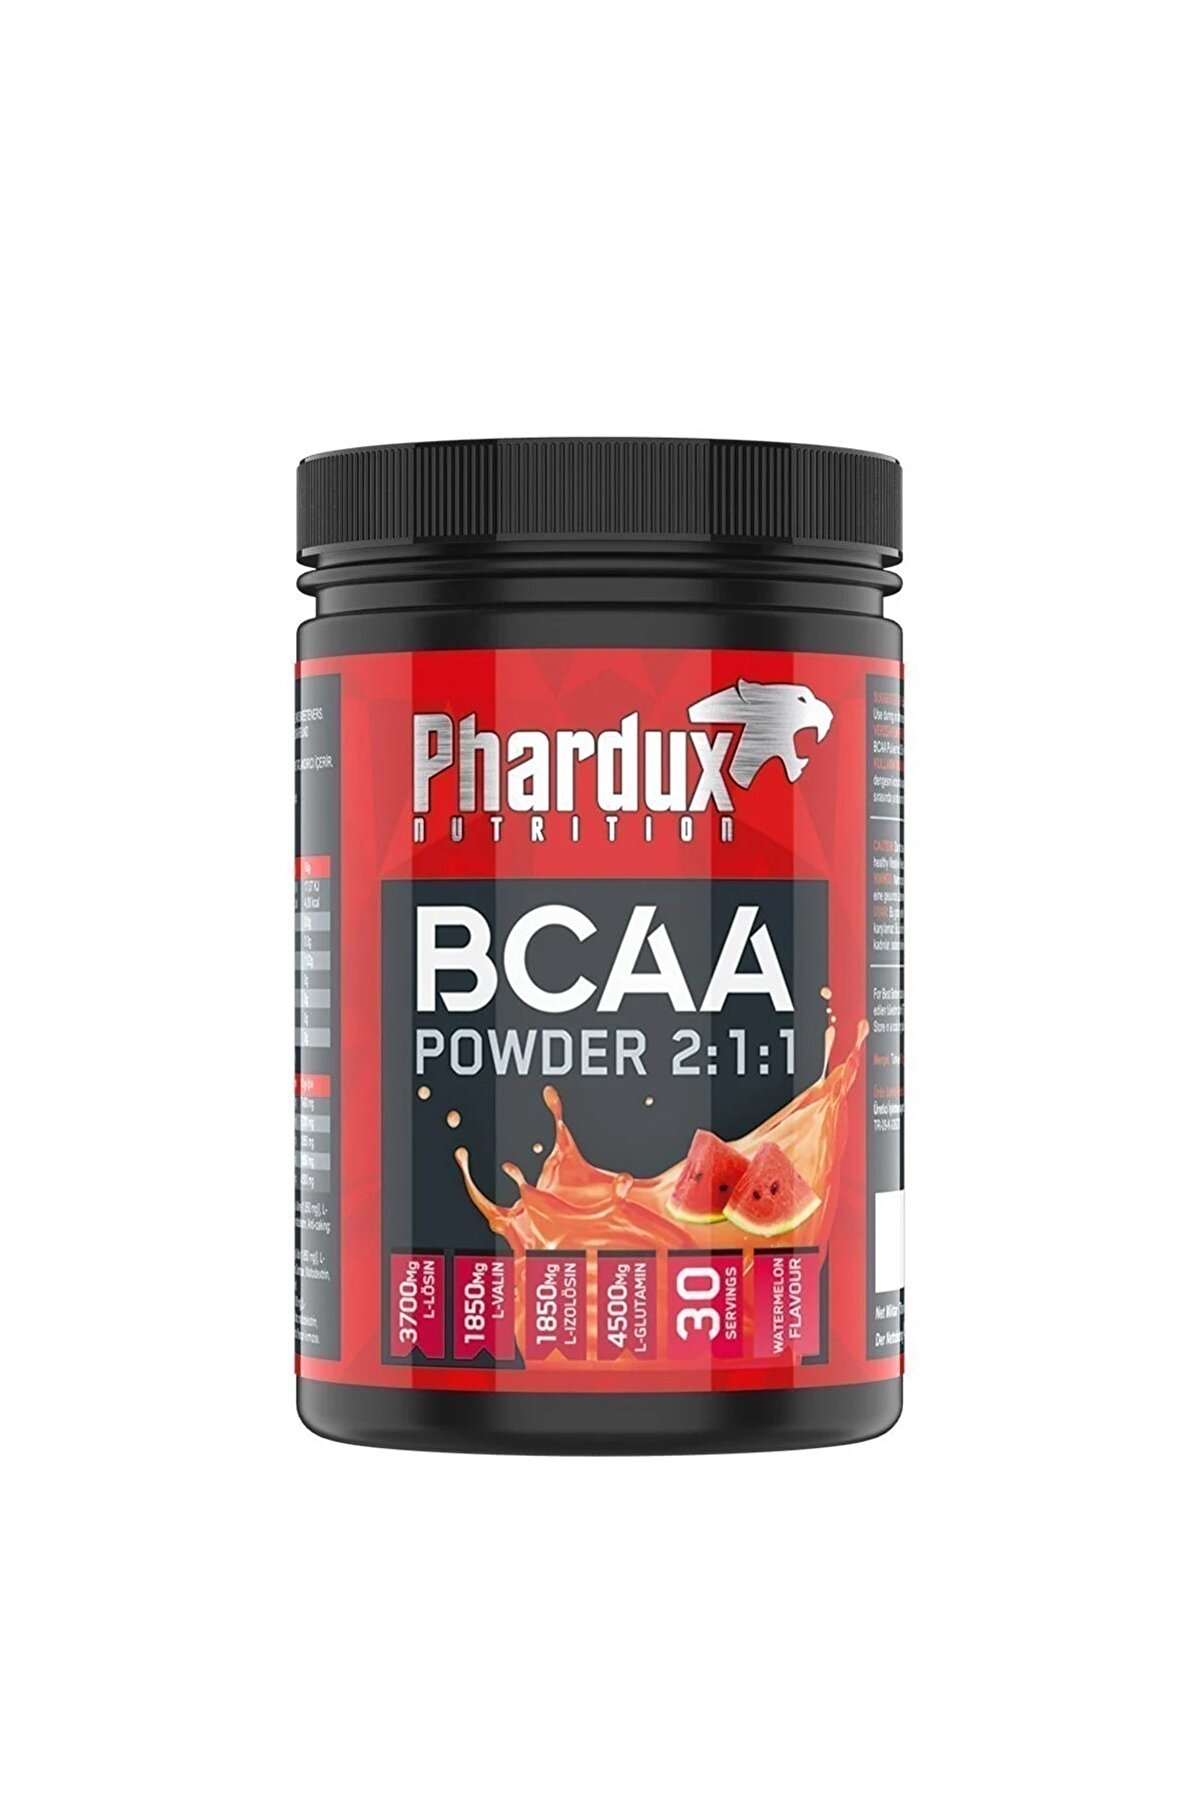 Phardux Karpuz Aromalı Nutrition Bcaa Powder 2:1:1 450 gr